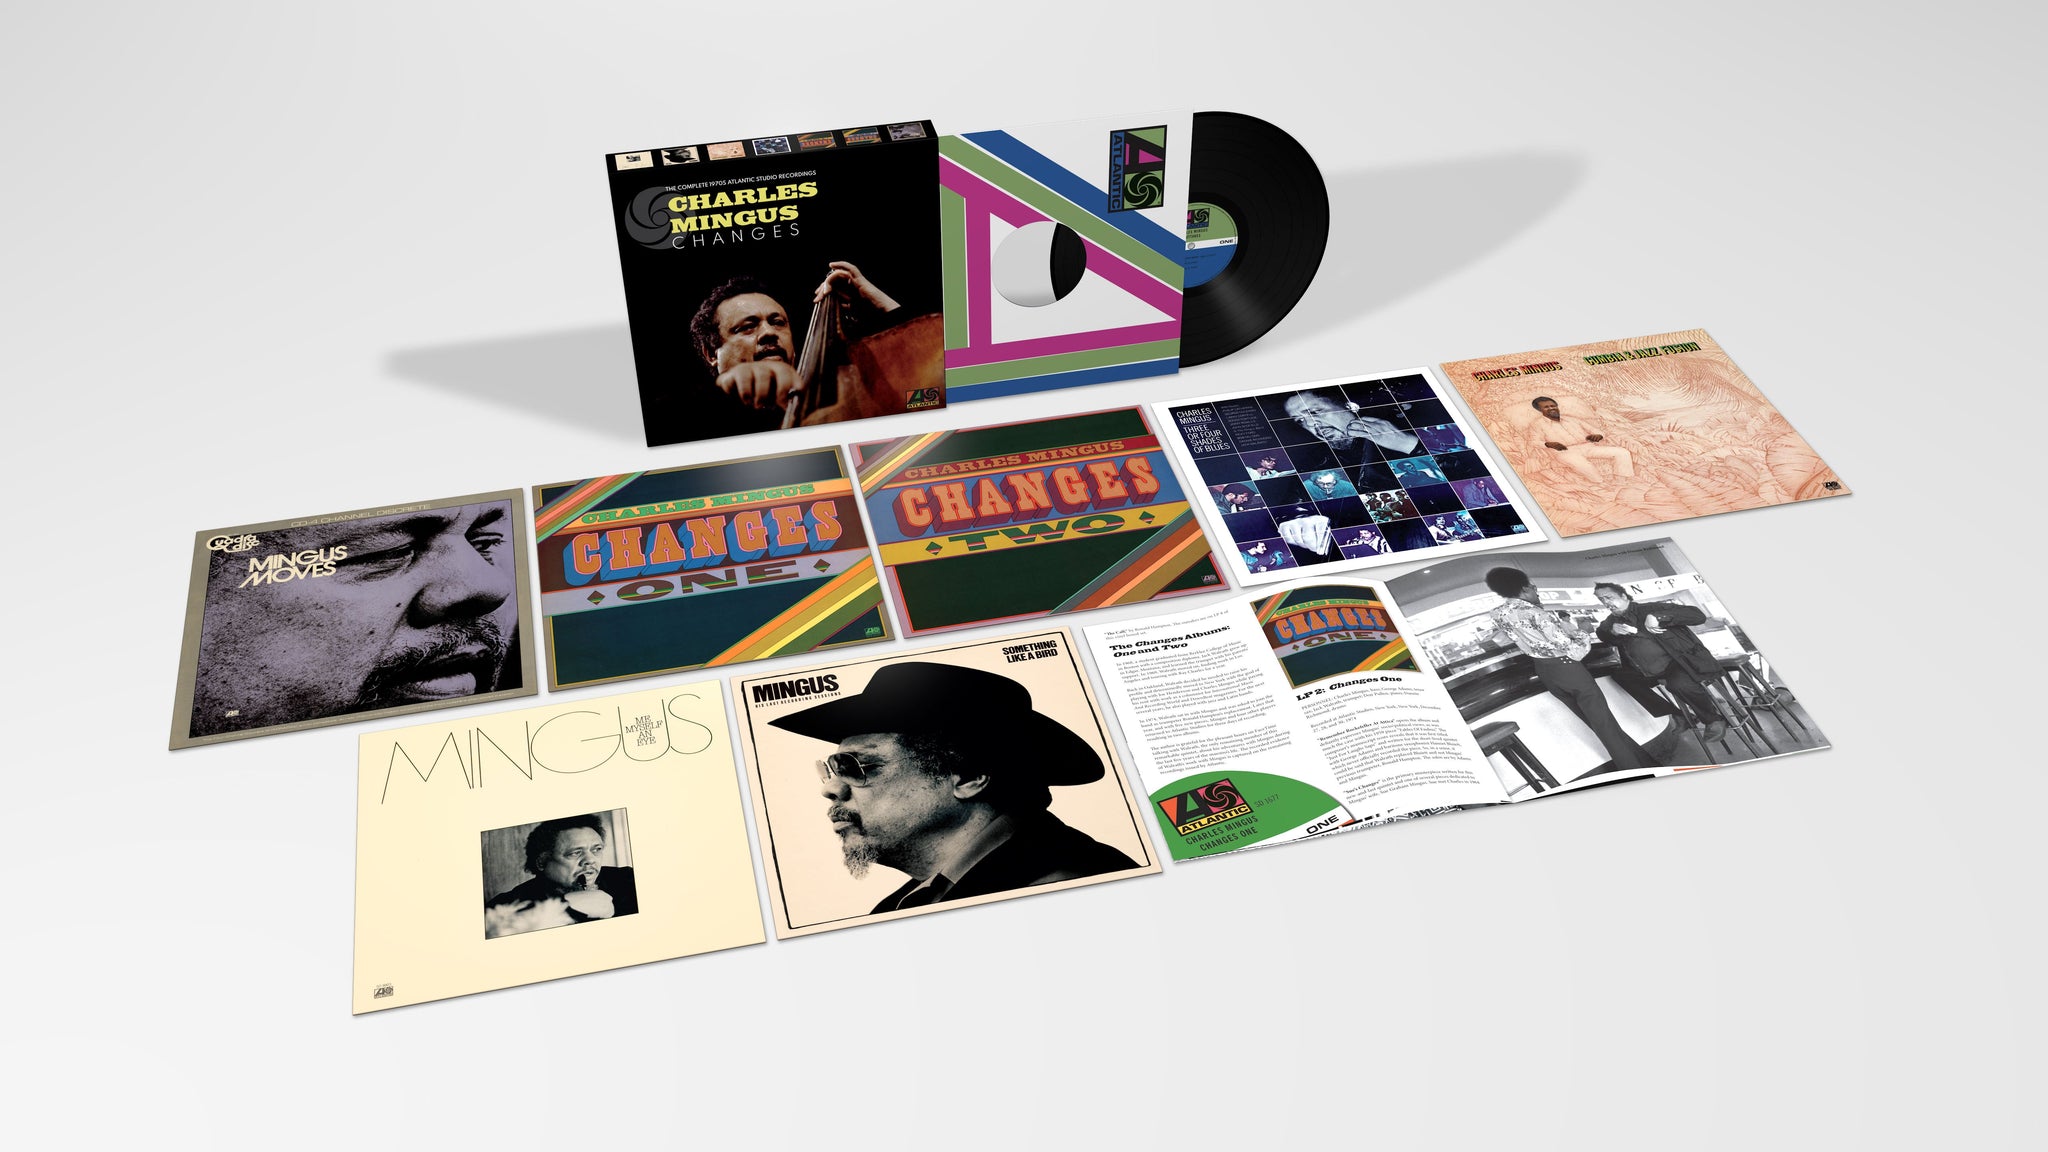 CHARLES MINGUS - Changes: The Complete 1970s Atlantic Studio Recordings - 8LP - Deluxe 180g Vinyl Box Set